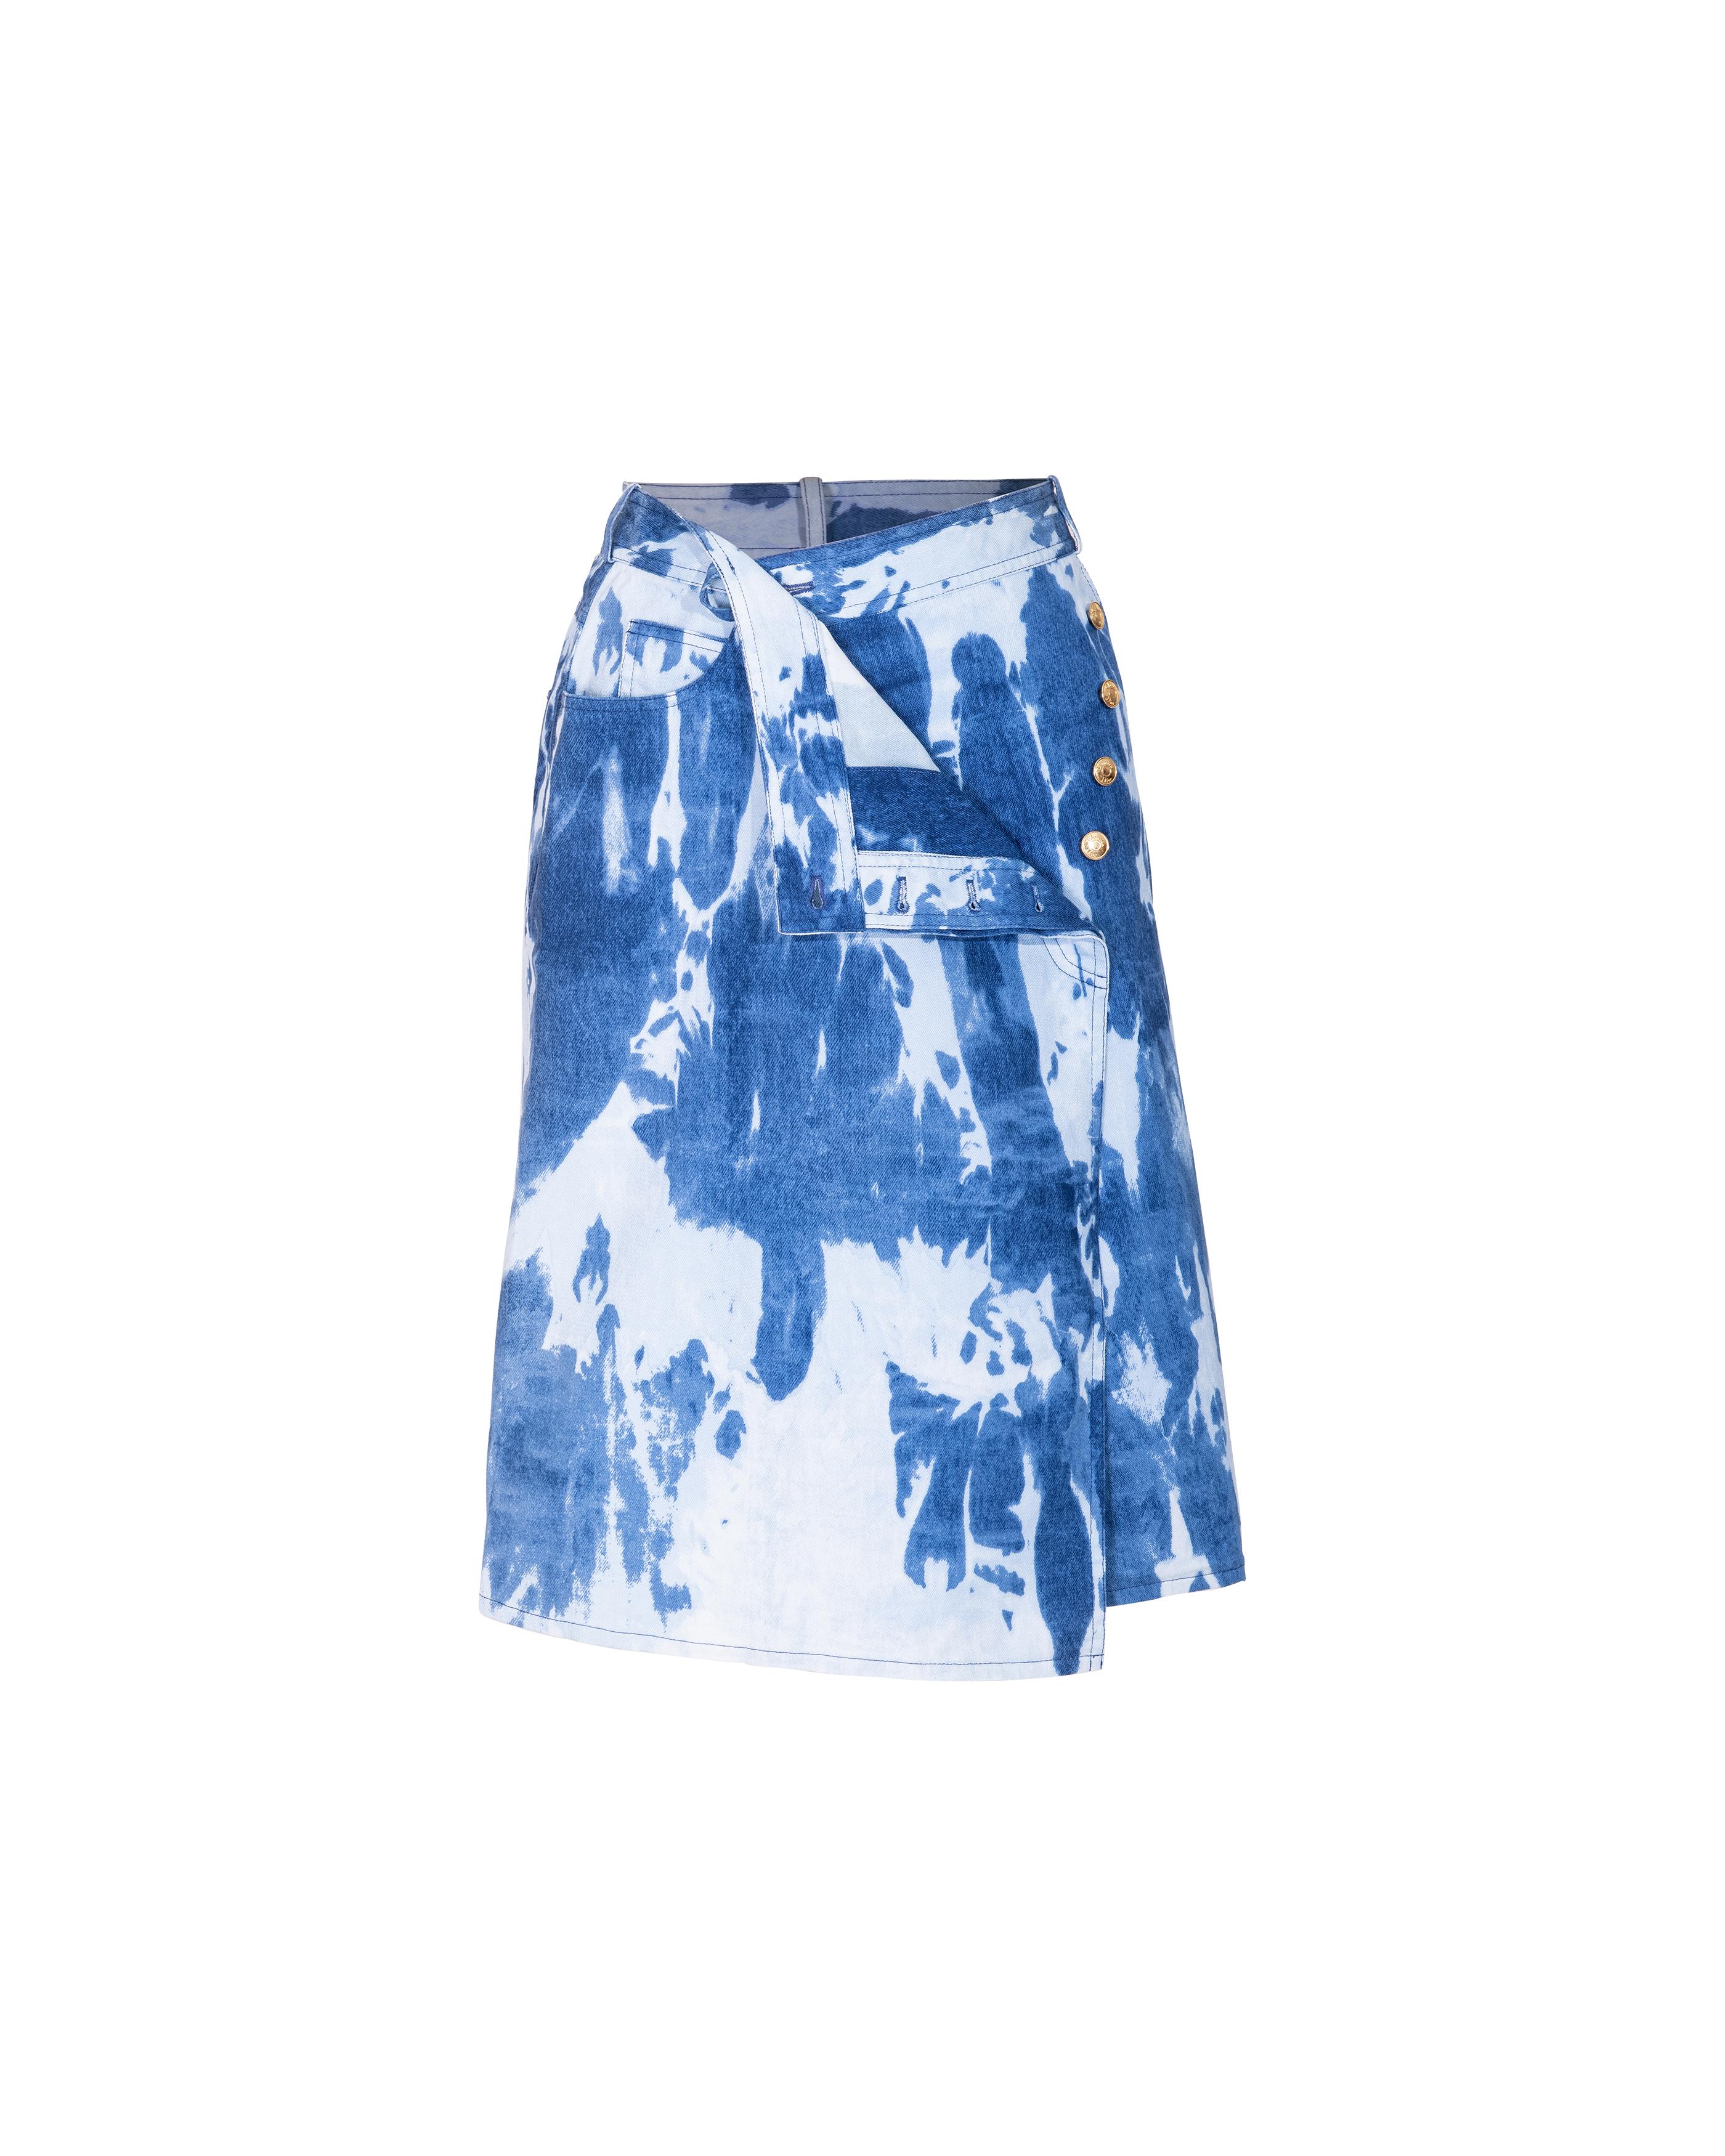 Blue A/W 2000 Christian Dior by John Galliano Denim Tie-Dye Wrap Skirt